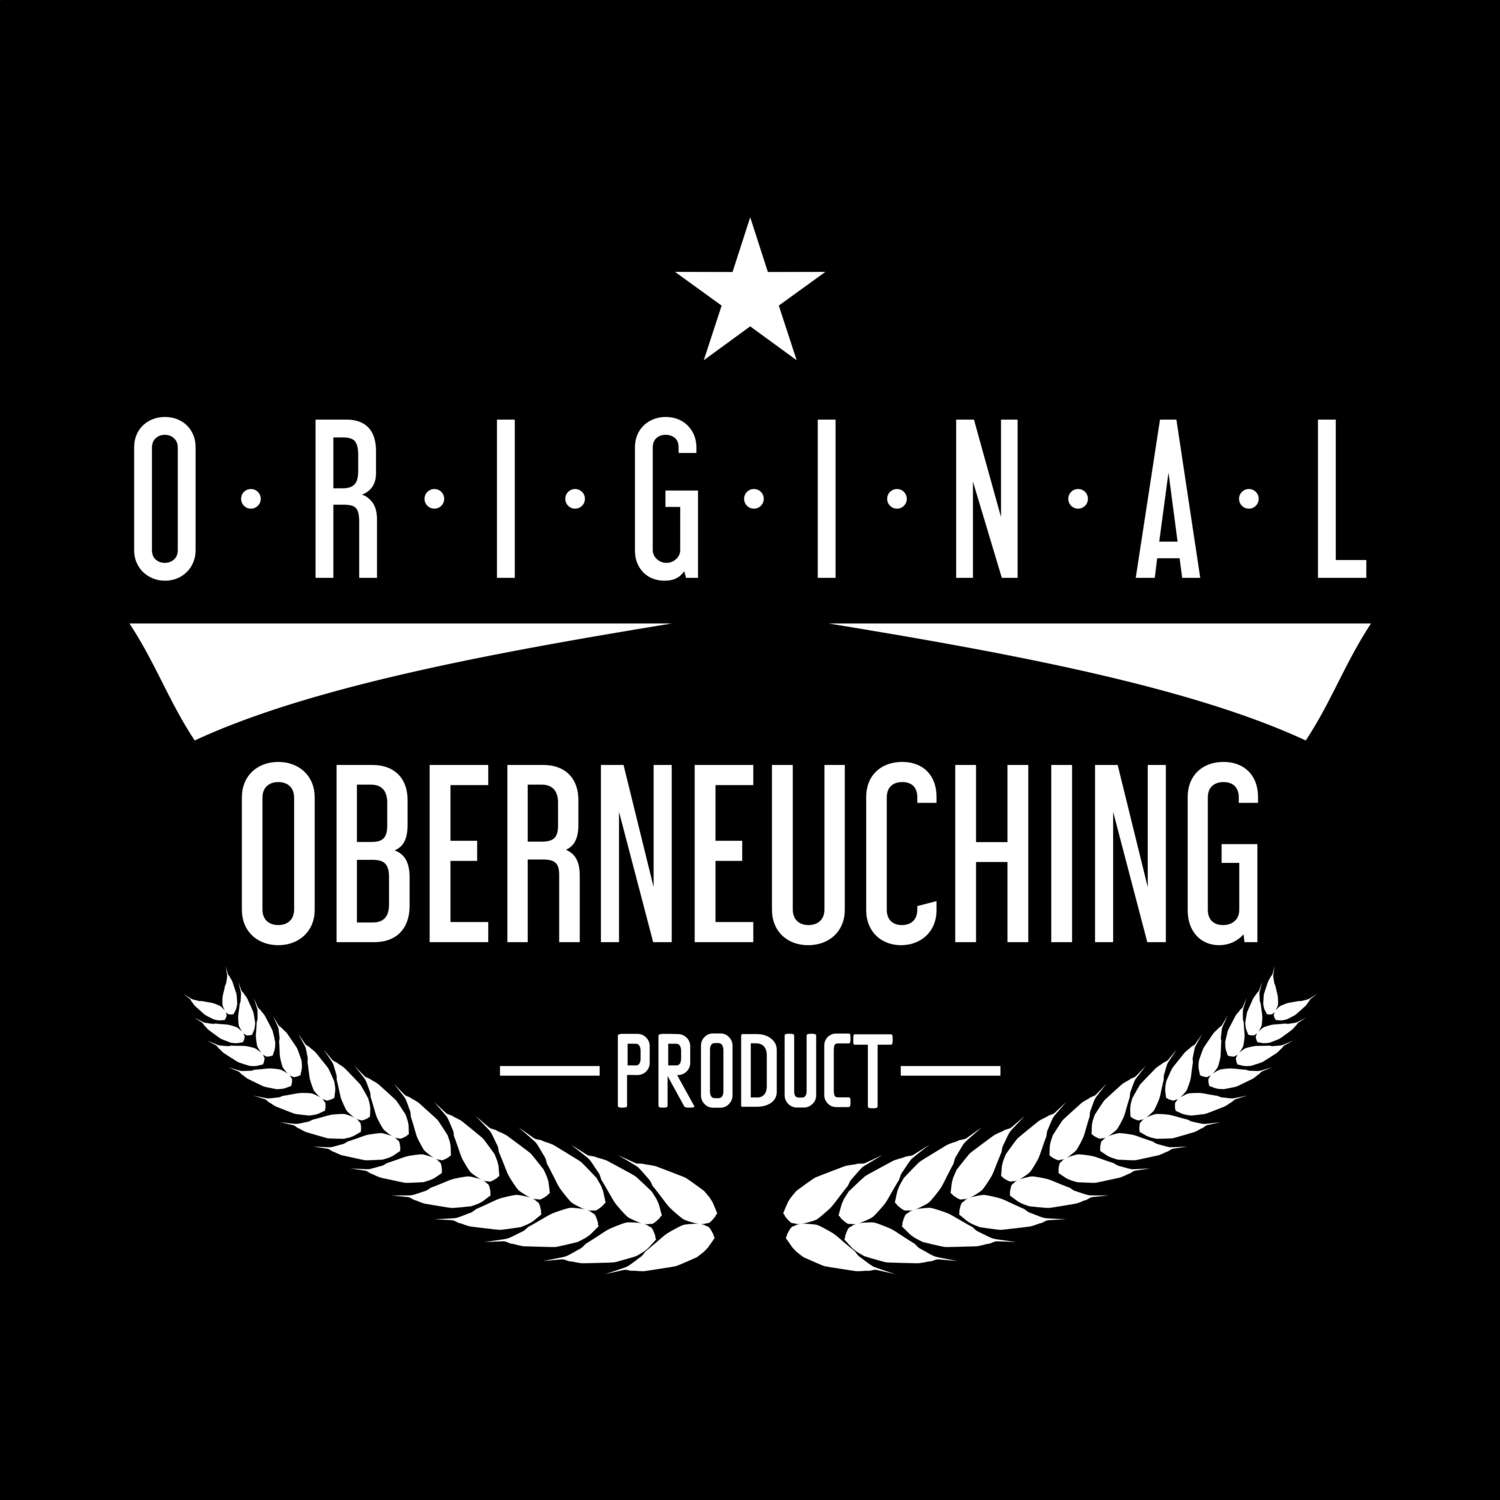 Oberneuching T-Shirt »Original Product«